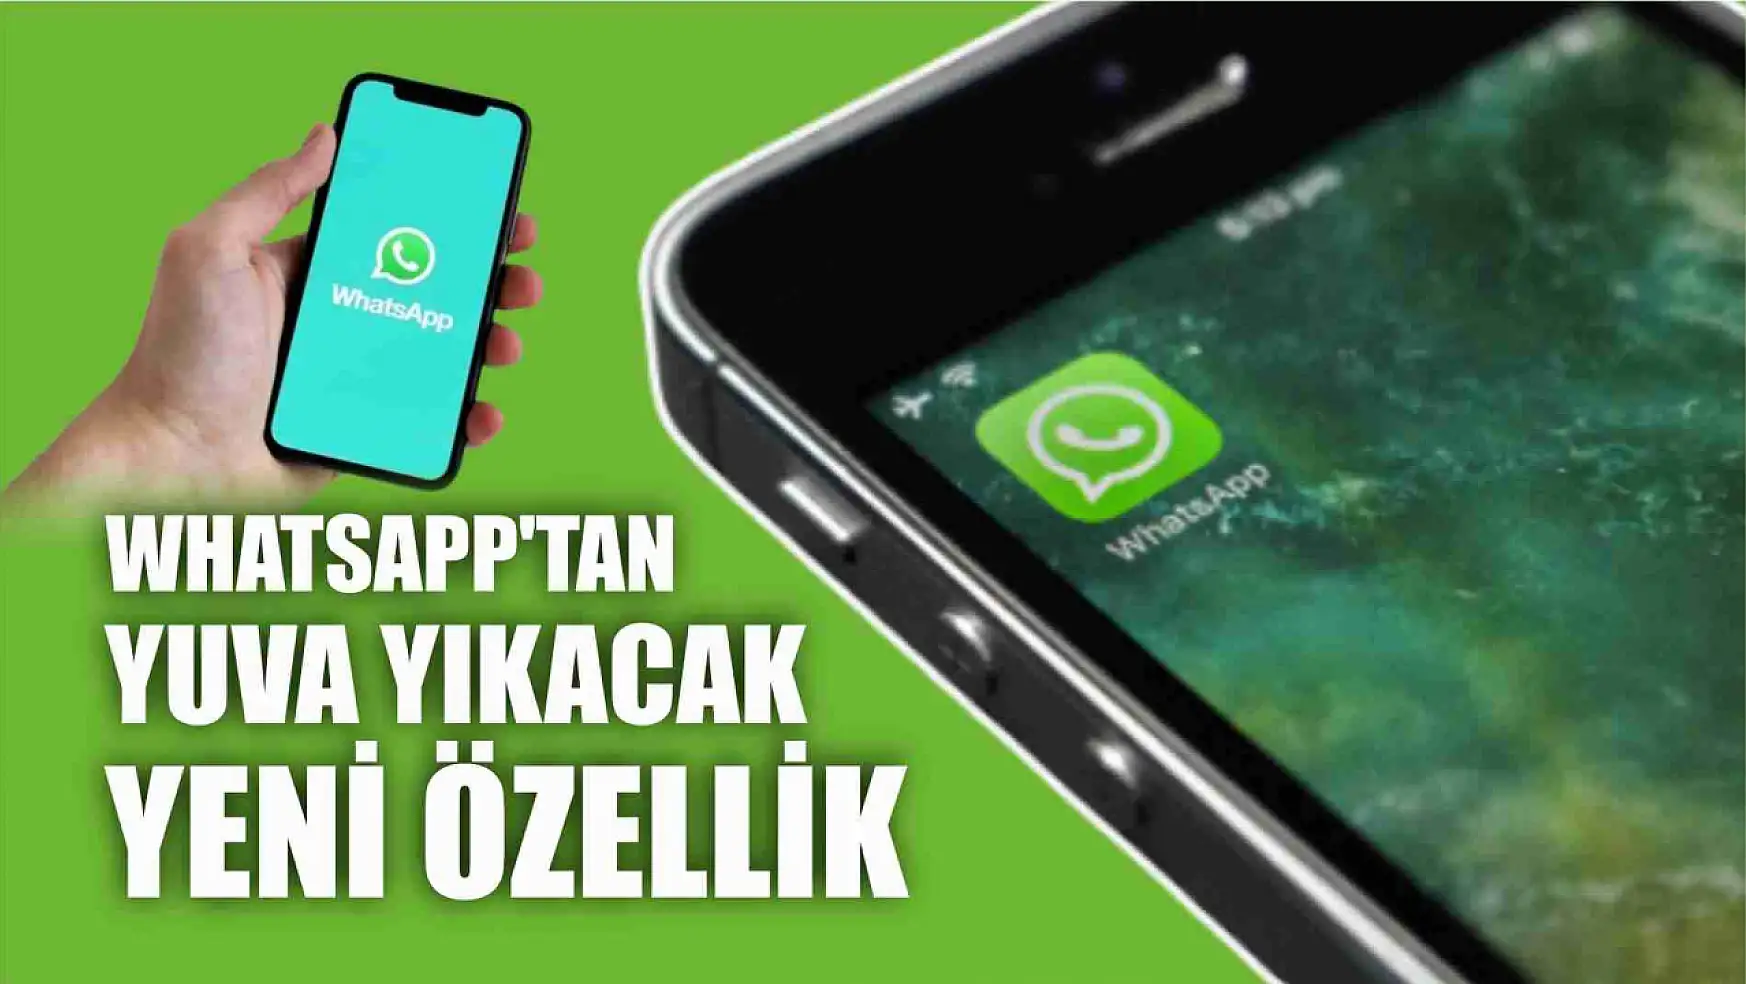 WhatsApp'tan yuva yıkacak yeni özellik